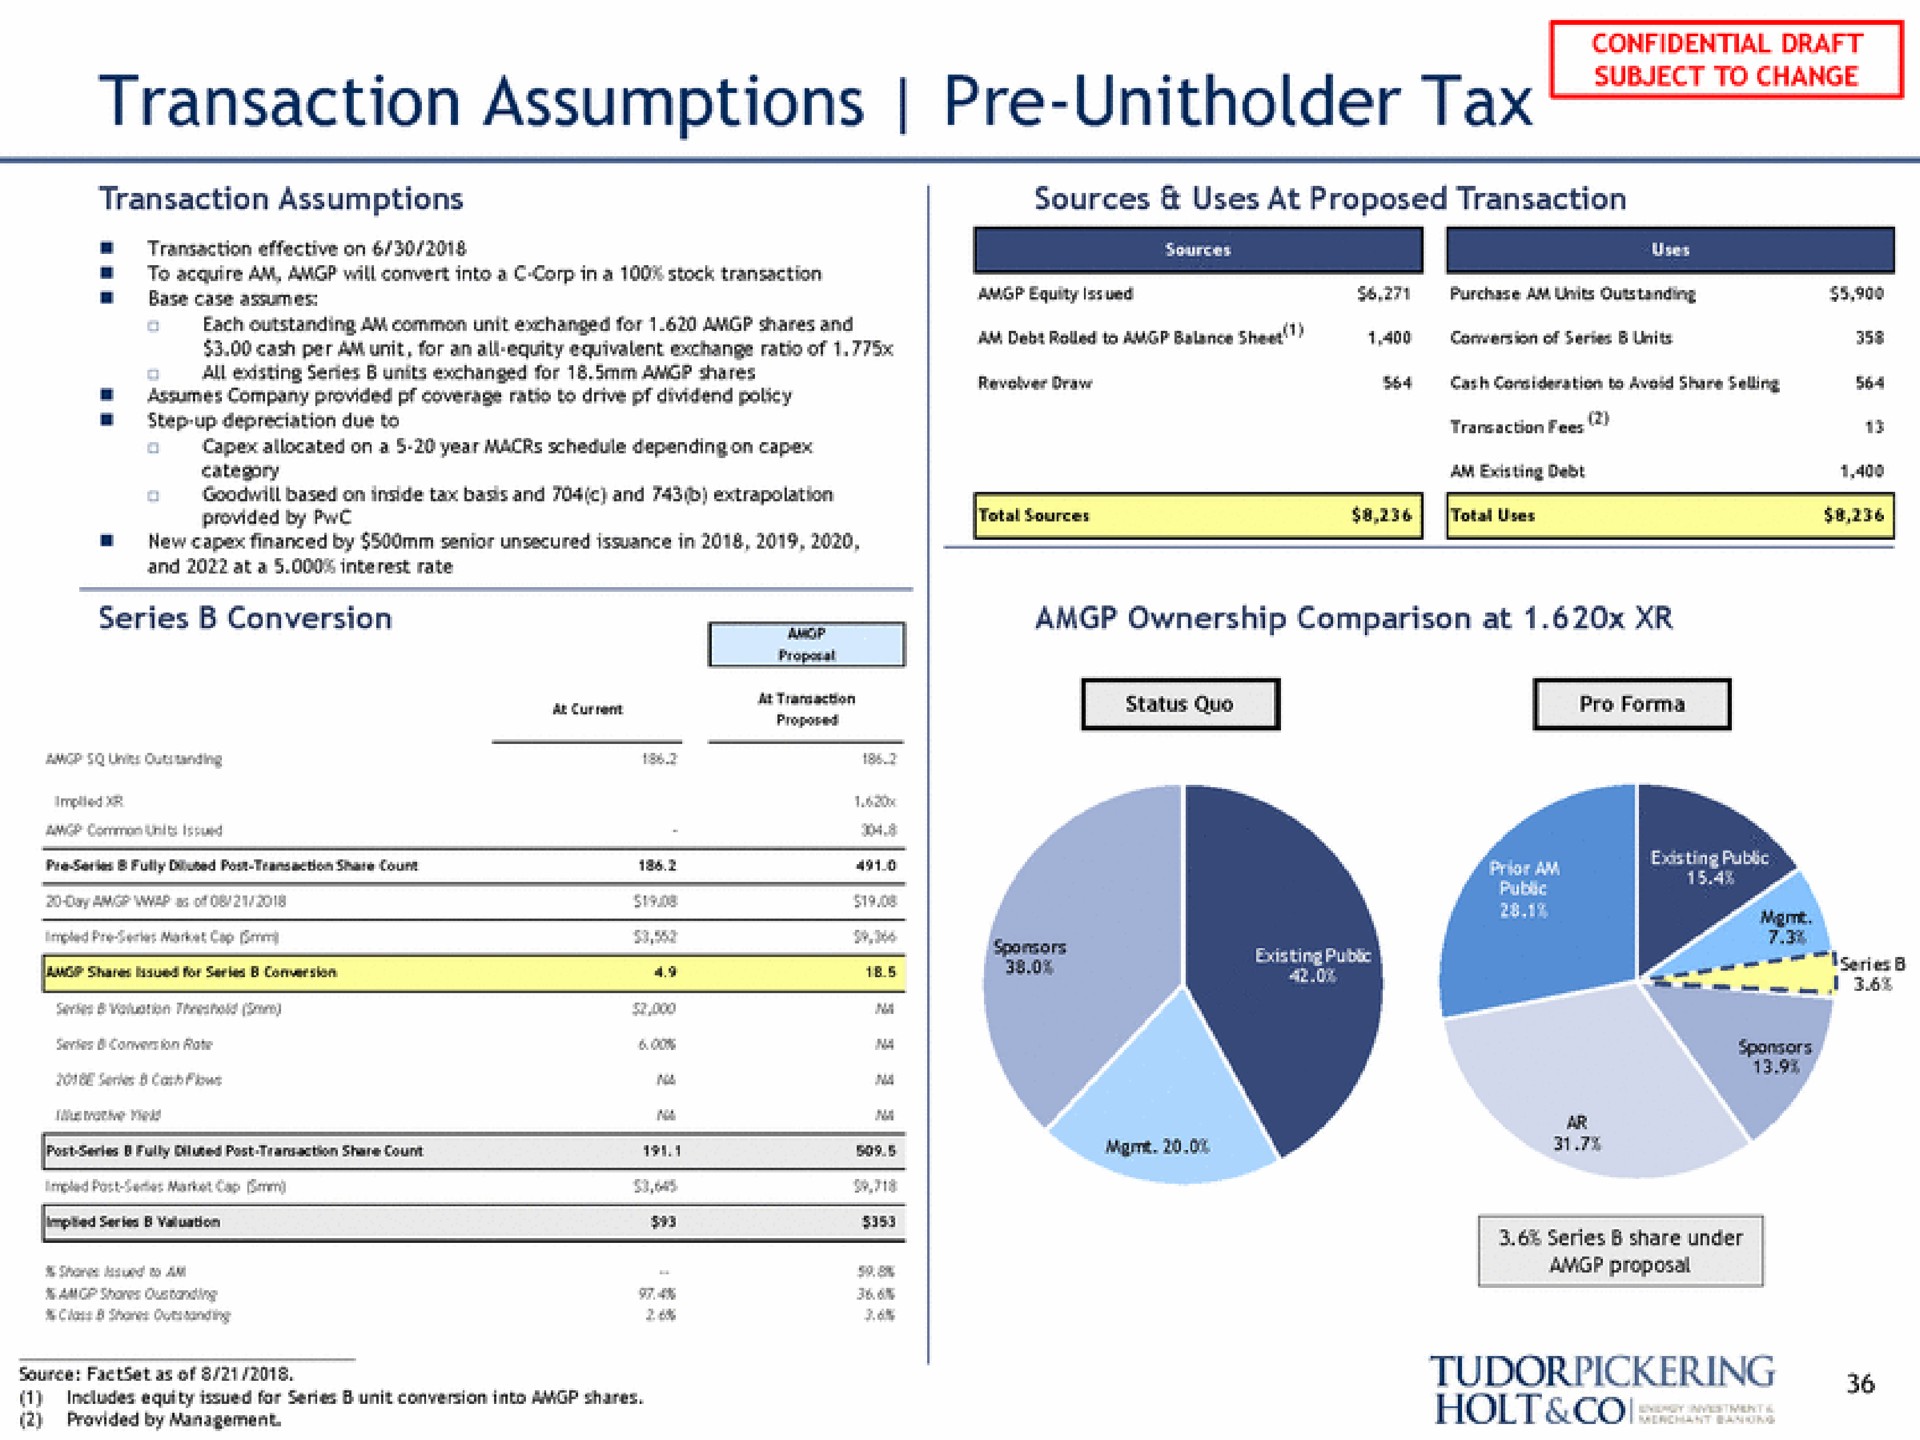 transaction assumption tax ram | Tudor, Pickering, Holt & Co